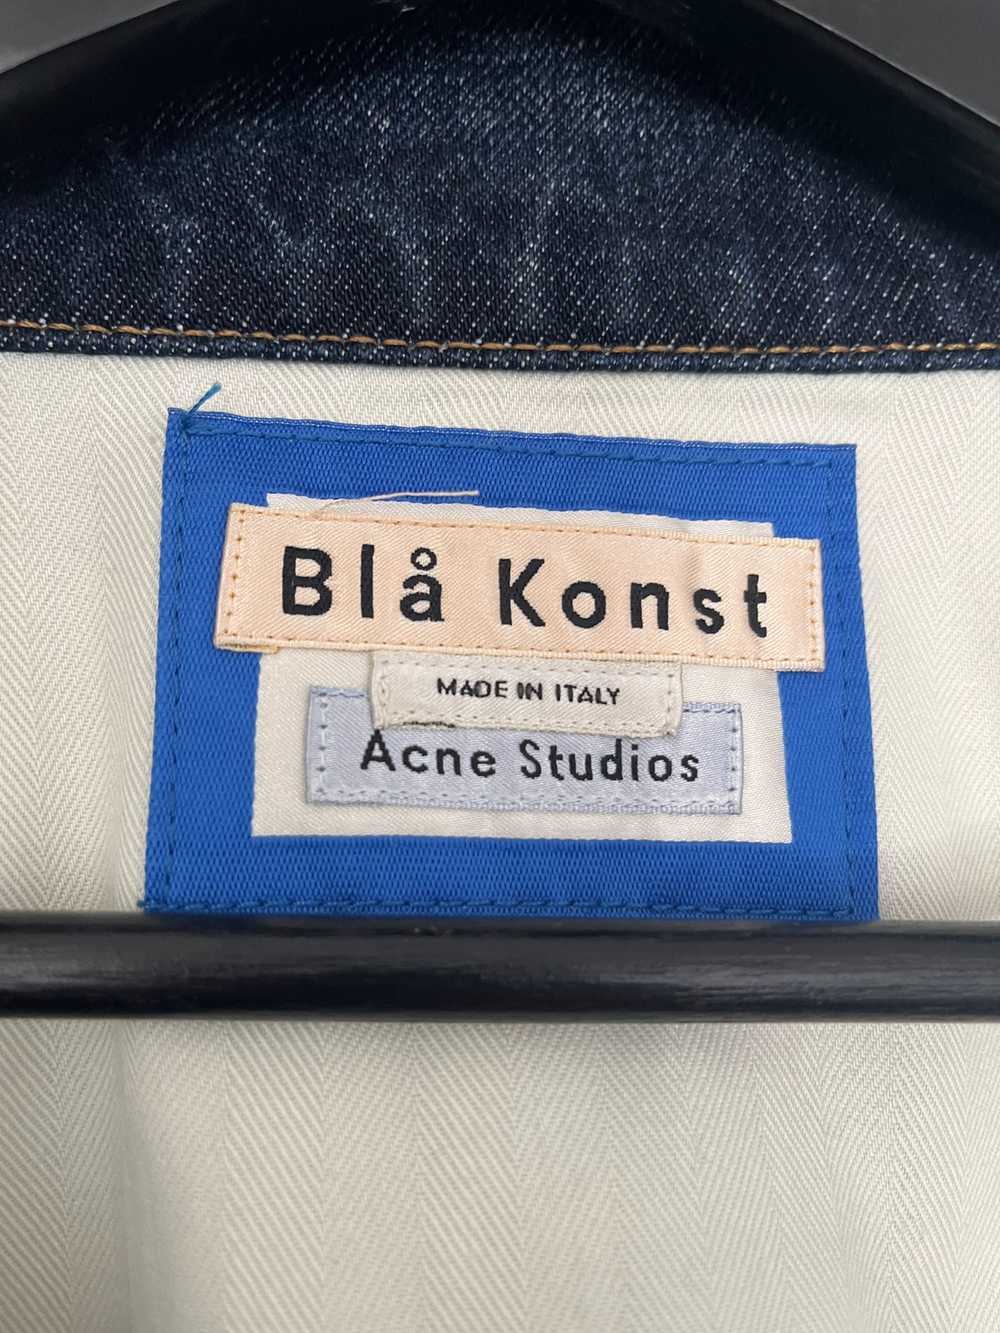 Acne Studios Acne Bla Konst Denim Jacket - image 3